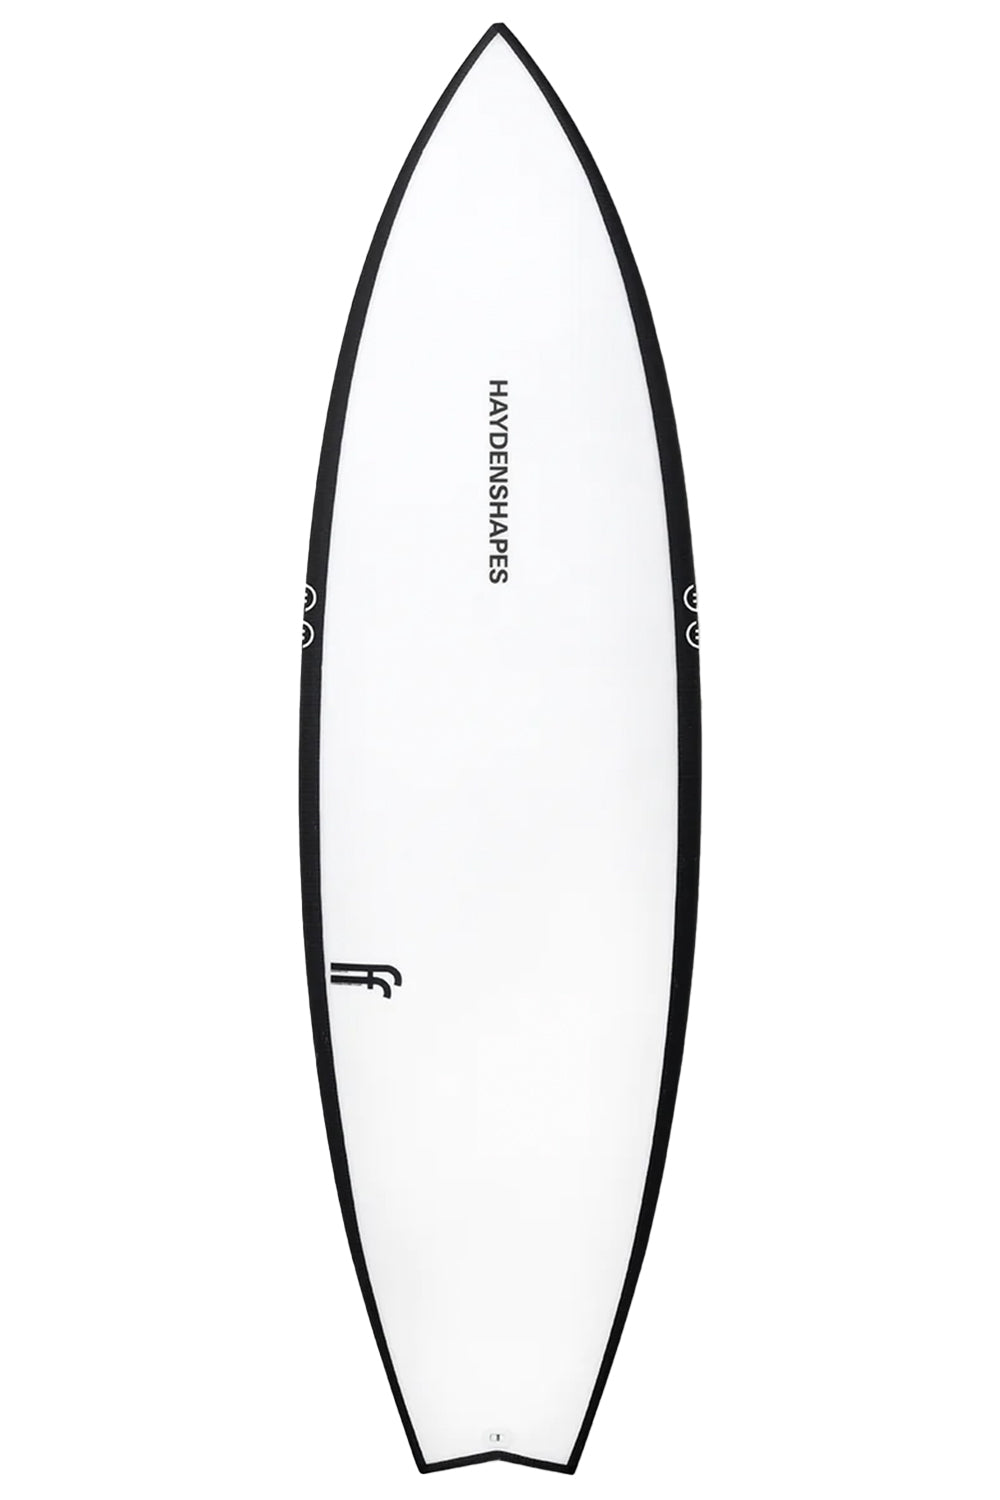 Hayden Shapes Cohort II FF Surfboard